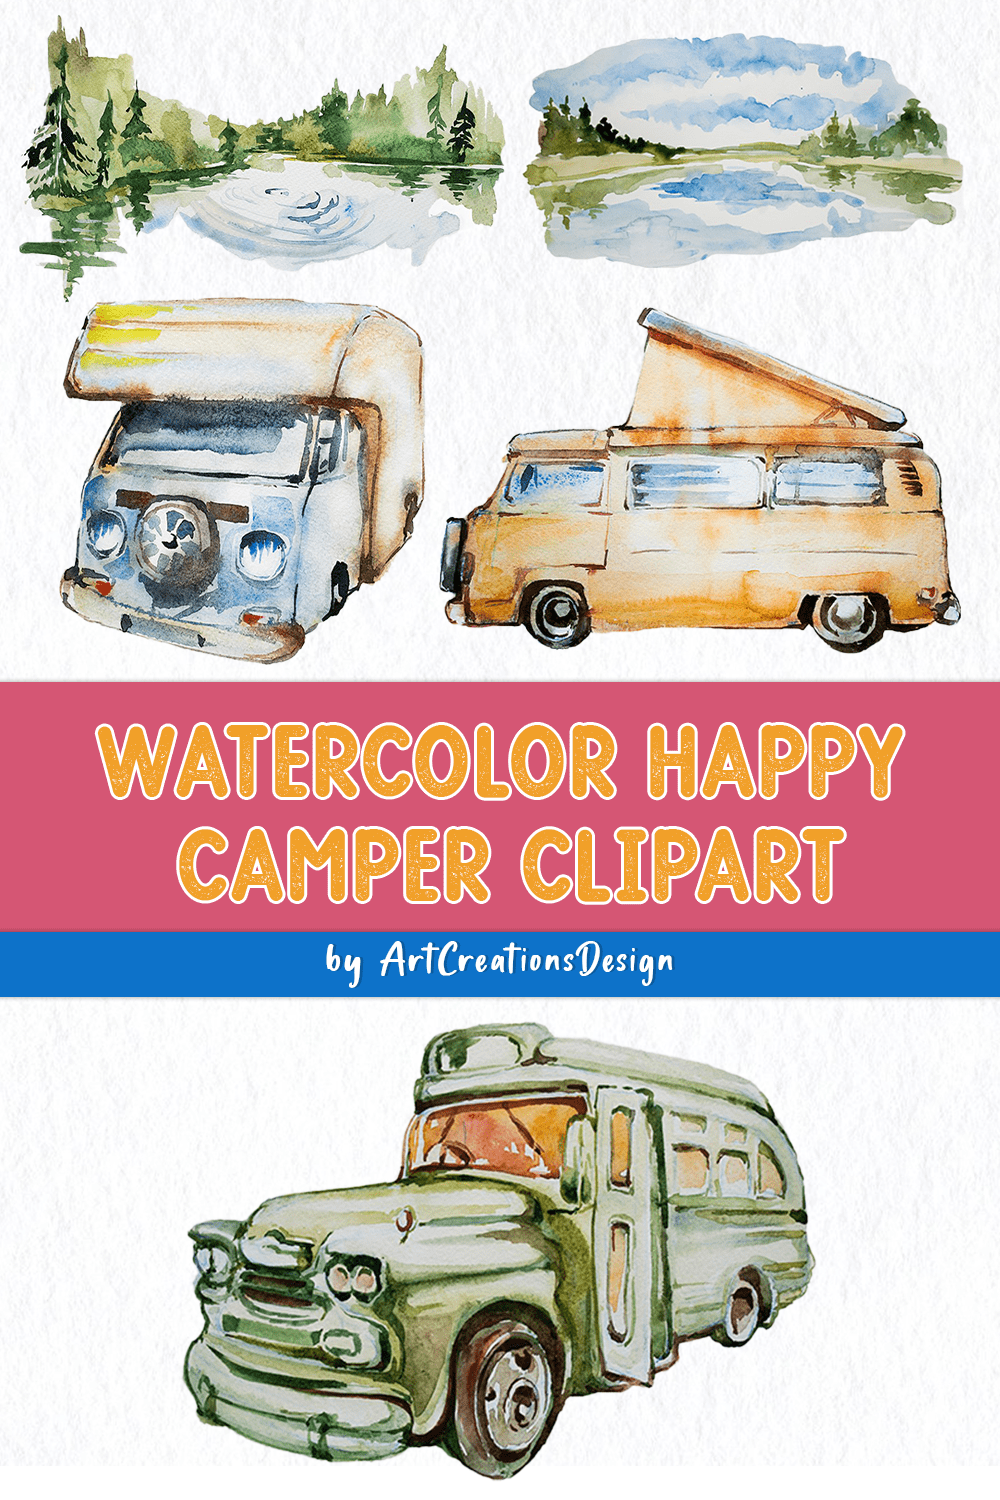 watercolor happy camper clipart pinterest